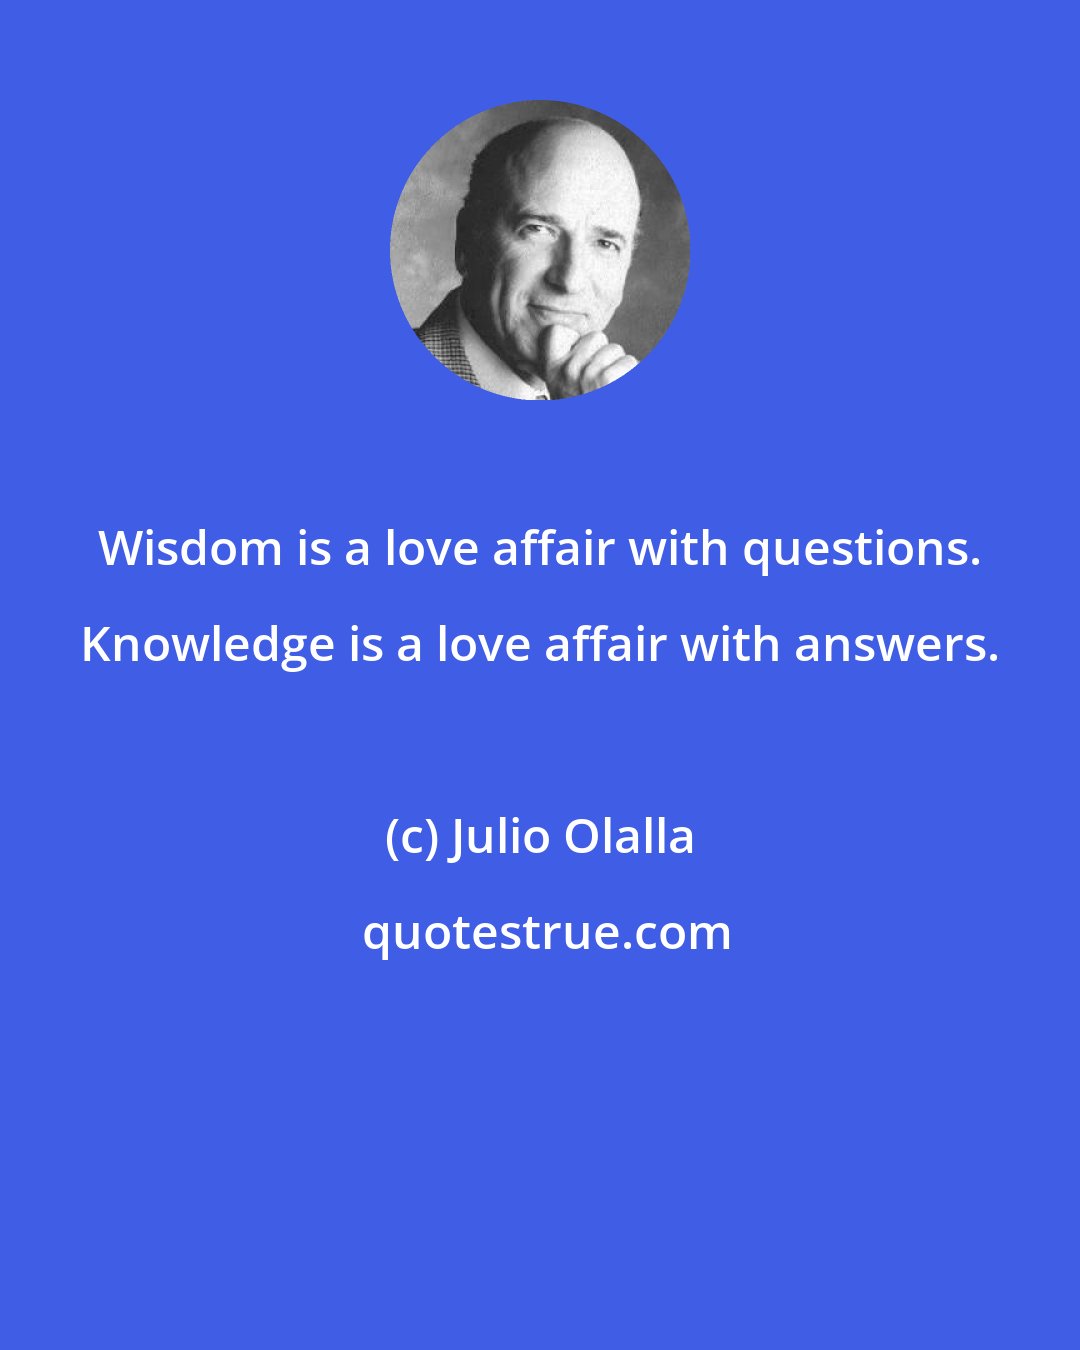 Julio Olalla: Wisdom is a love affair with questions. Knowledge is a love affair with answers.